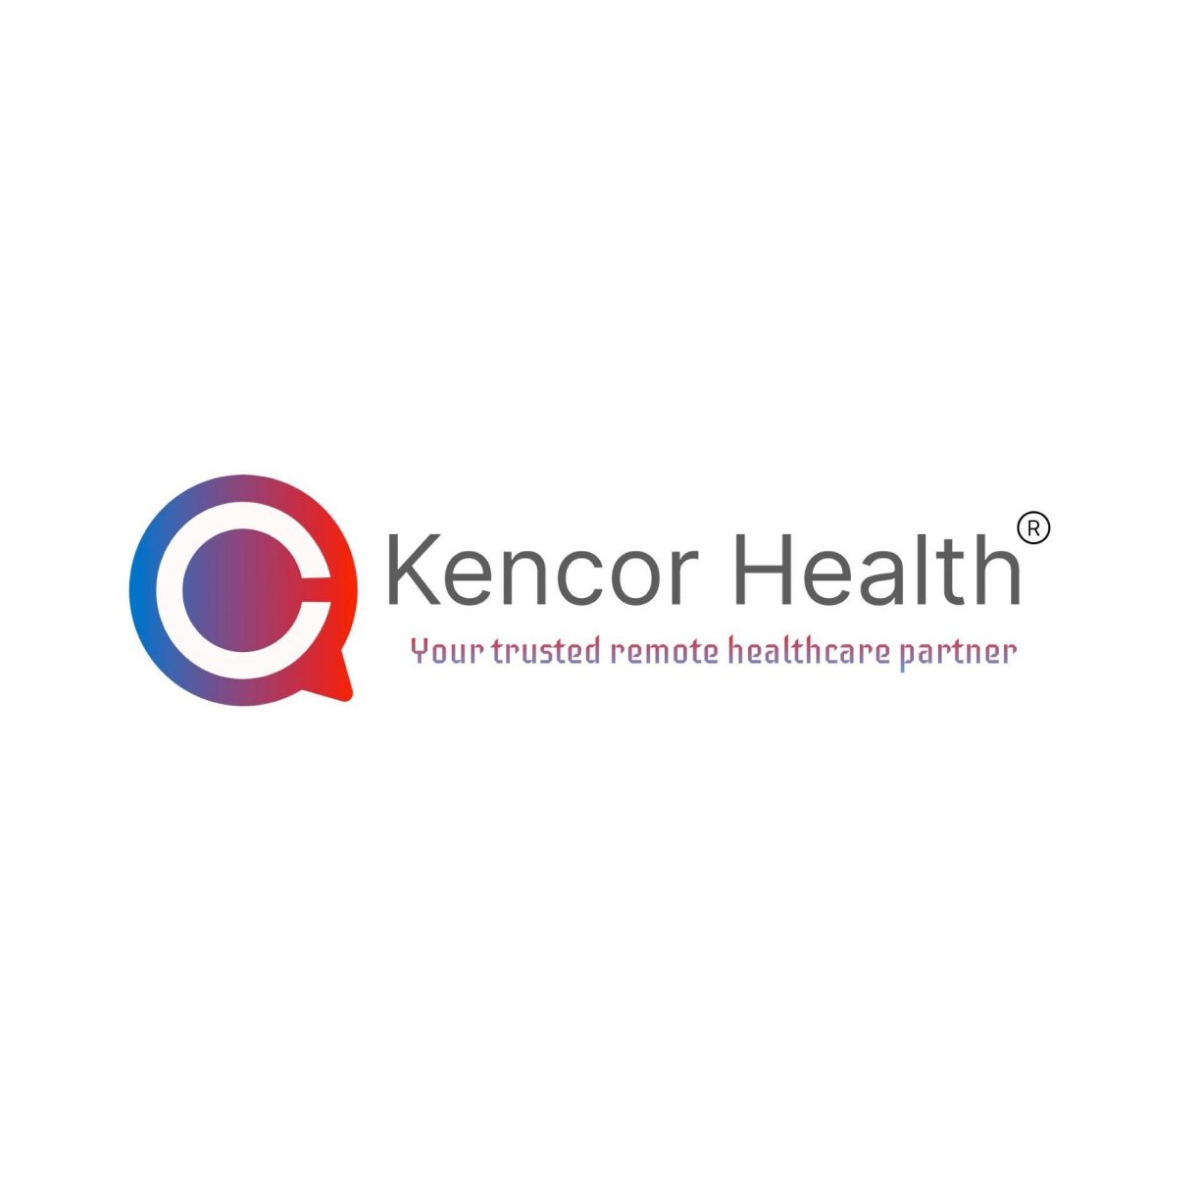 Kencor Health